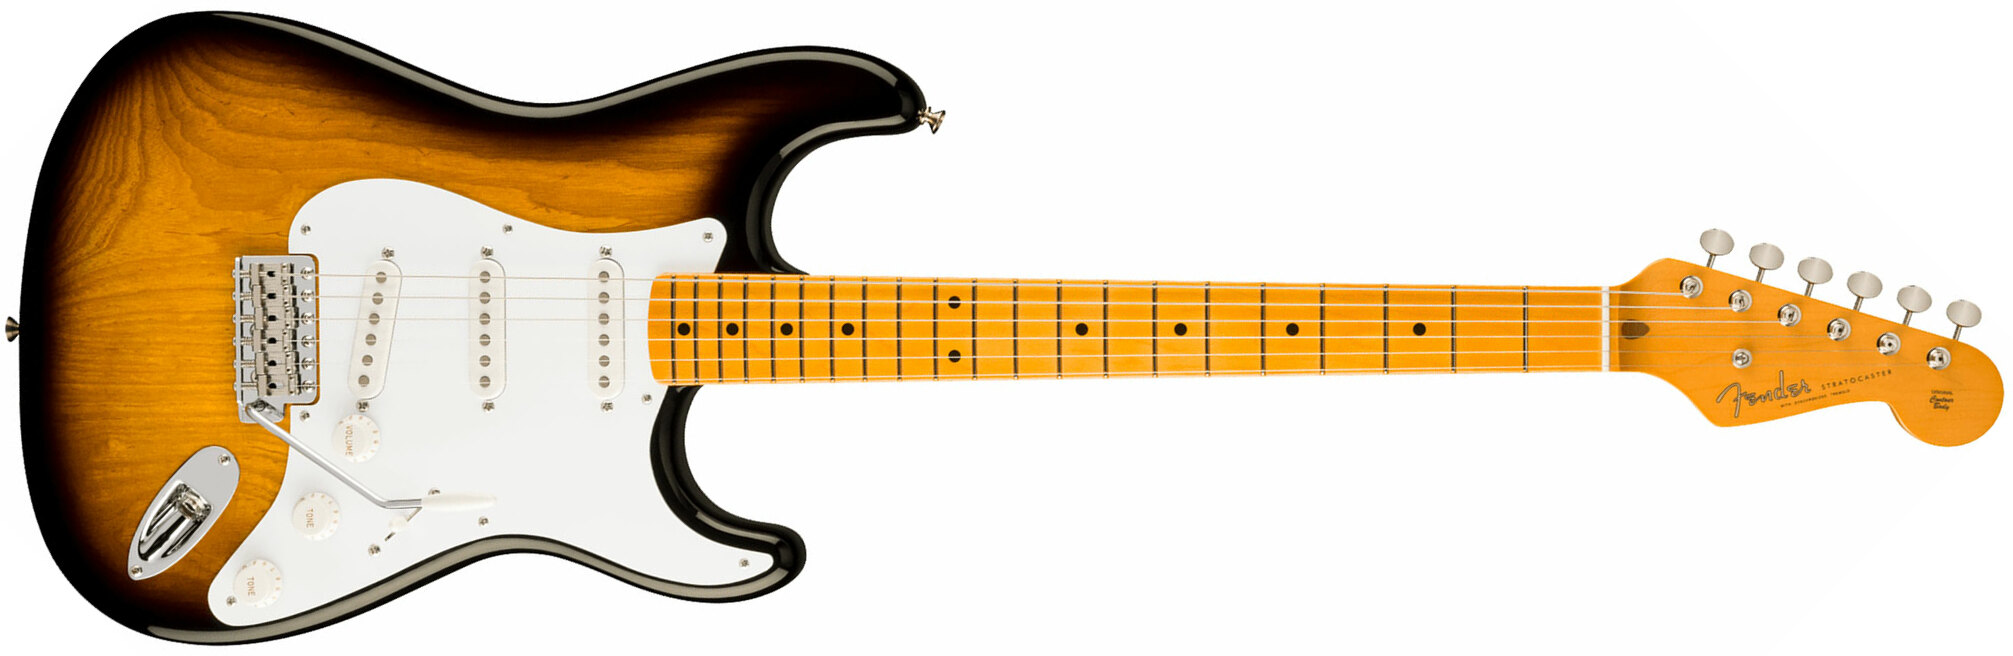 Fender Strat 1954 70th Anniversary American Vintage Ii Ltd Usa 3s Trem Mn - 2-color Sunburst - Guitarra eléctrica con forma de str. - Main picture